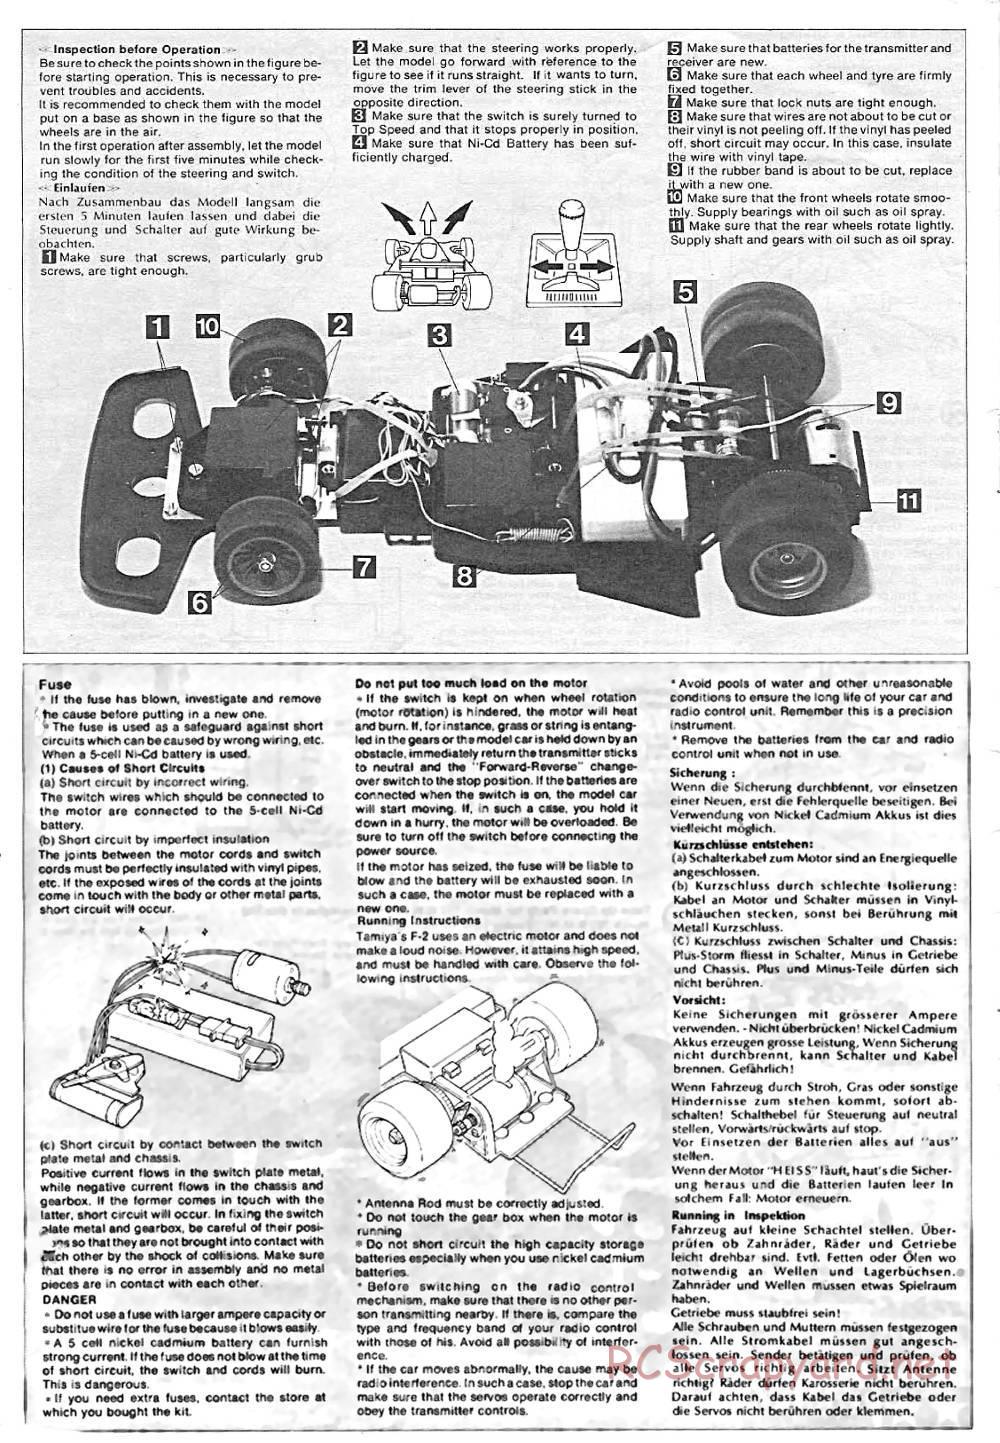 Tamiya - Ralt RT2 Hart 420R (F2) - 58018 - Manual - Page 12